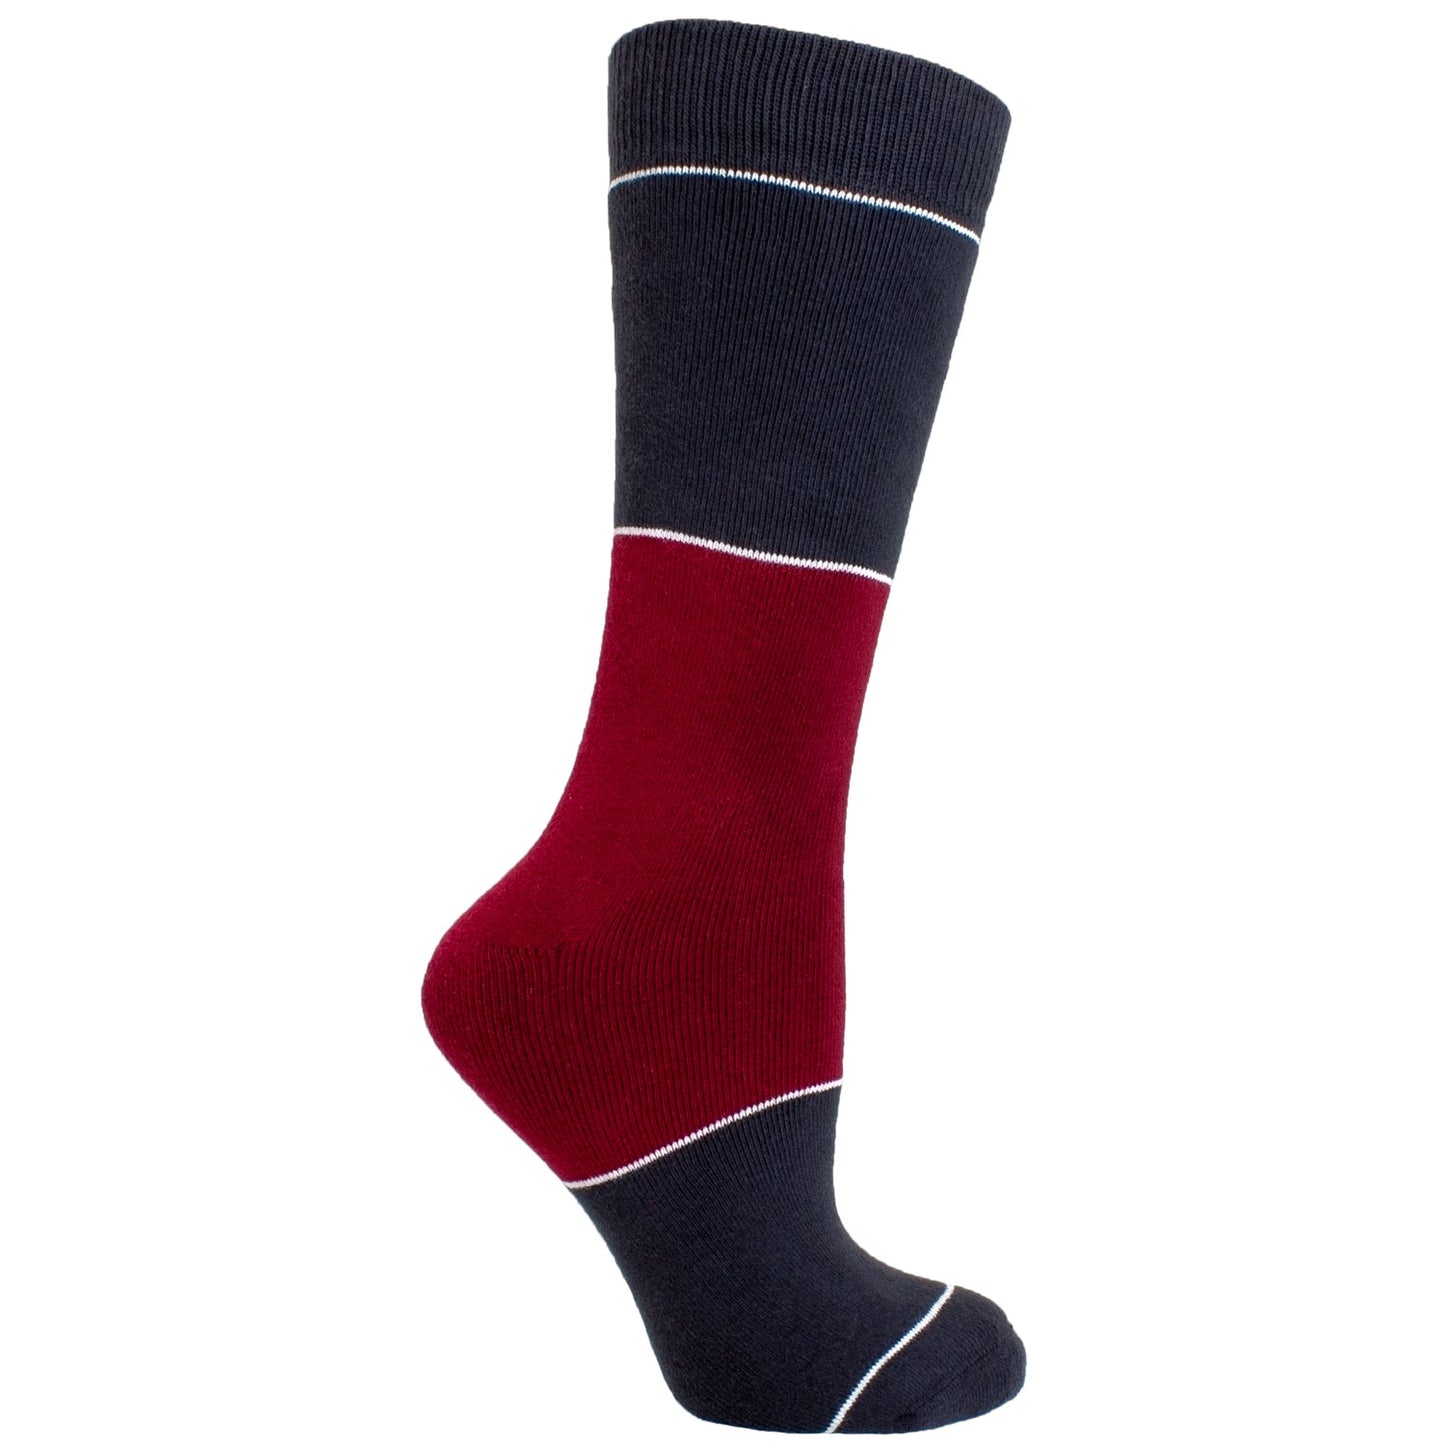 Men's Socks Color Block Striped Athletic Performance Comfortable Mid Calf Crew Socks Burgundy